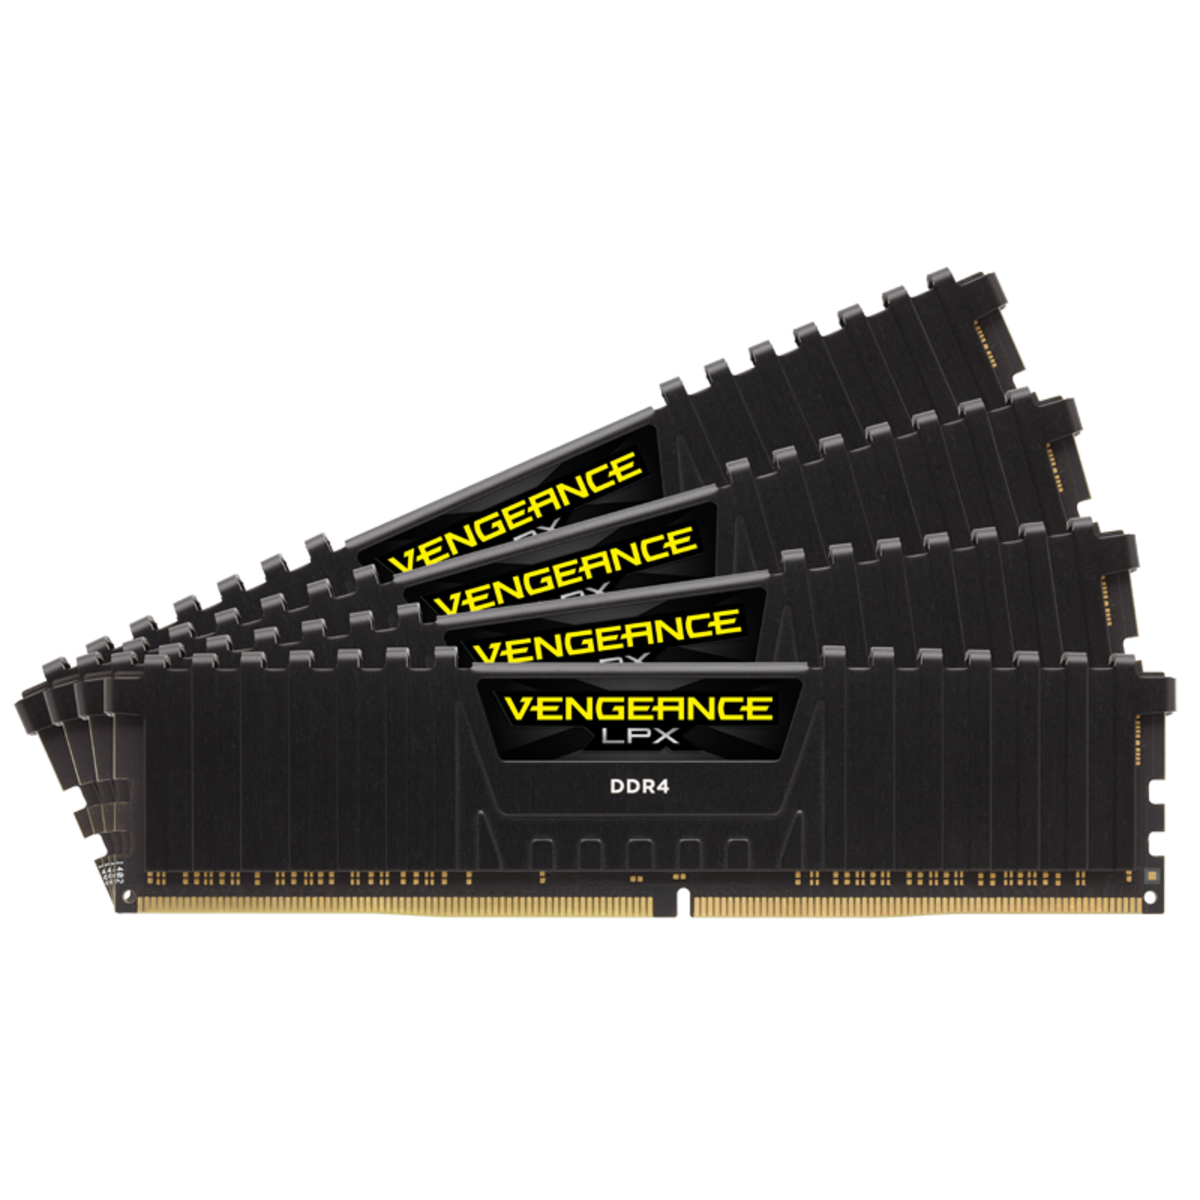 Corsair Vengeance LPX 32GB DDR4 4000MHz SDRAM (4 x 8GB) Memory Kit